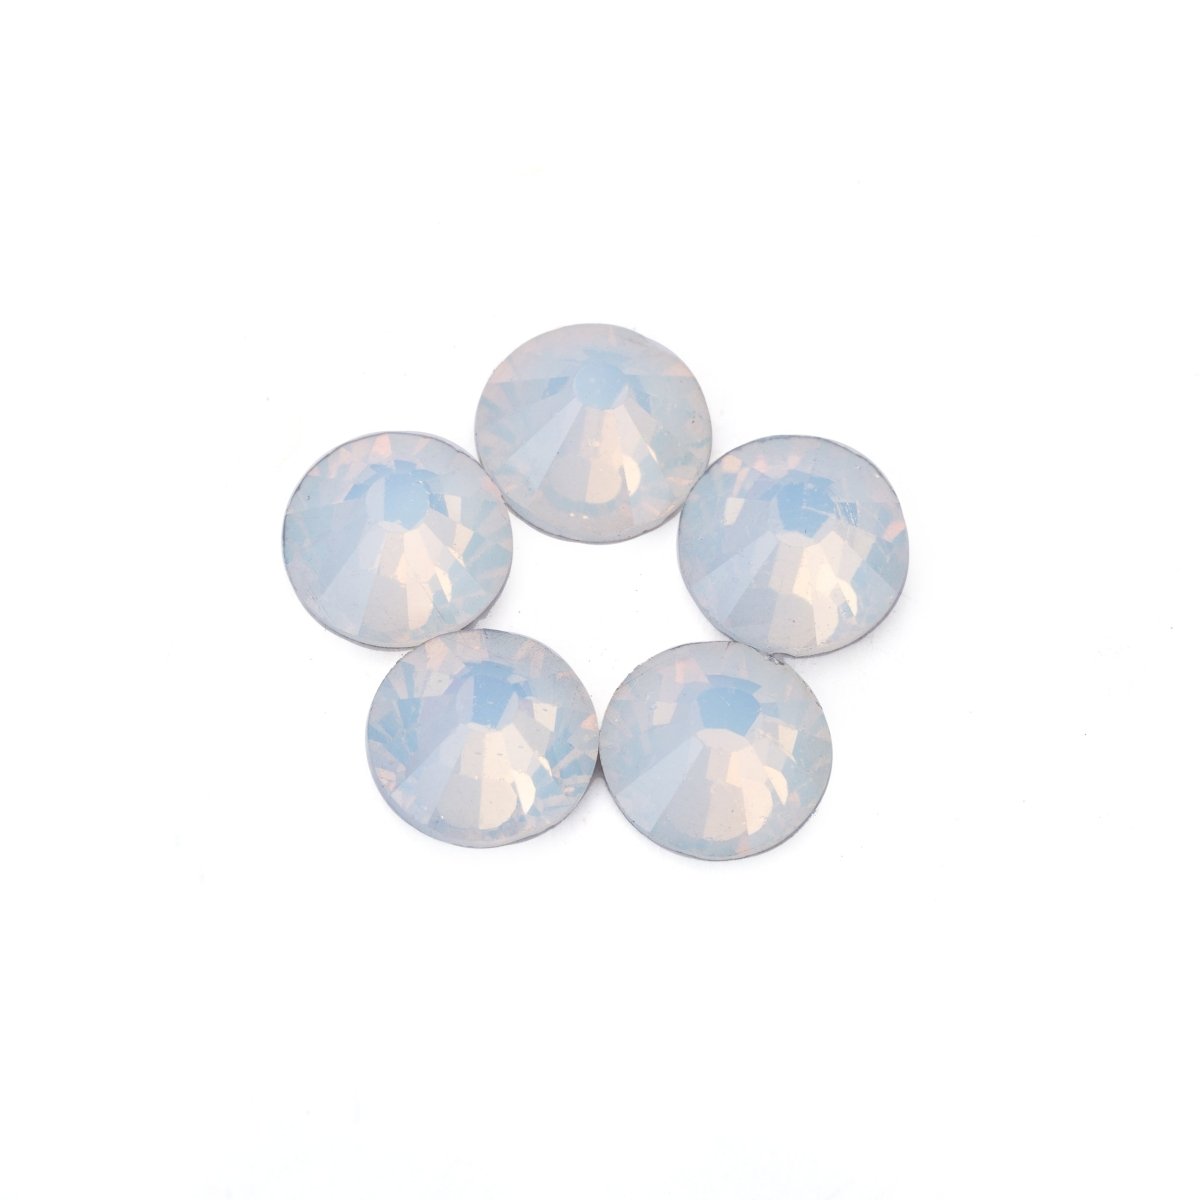 1440 pcs Crystal Cream White / White Opal #234 - DLUXCA